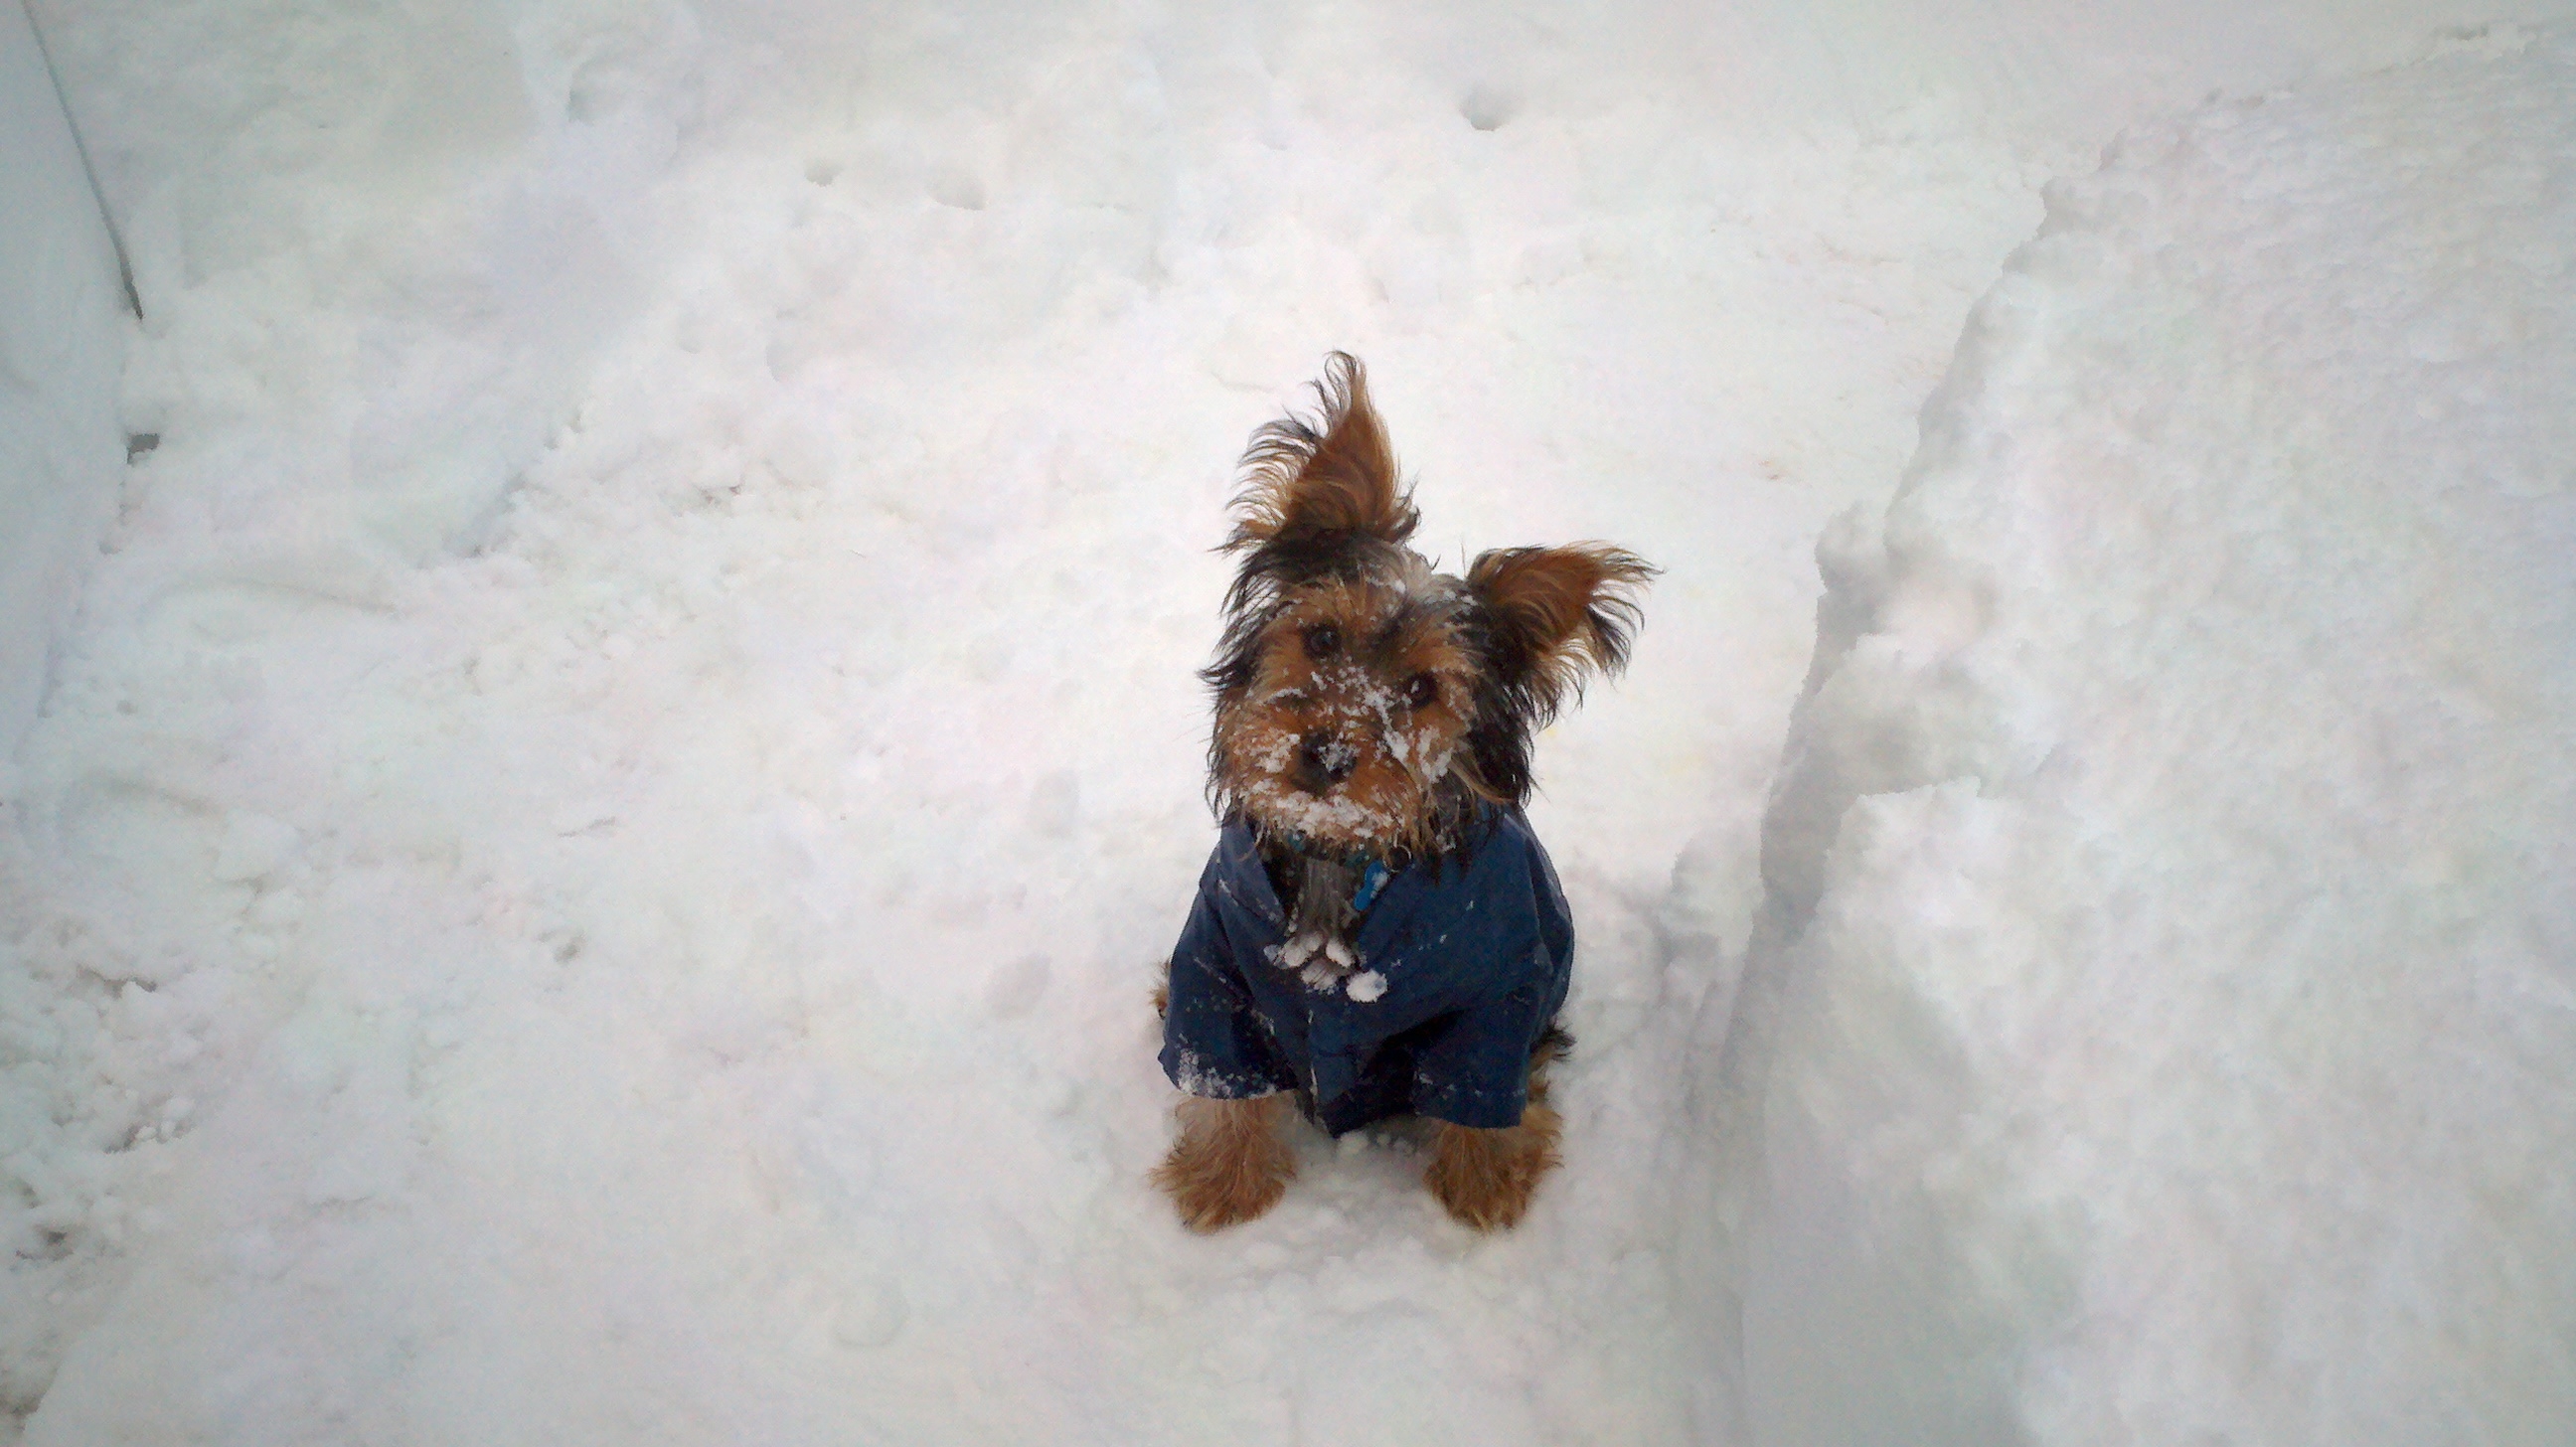 snow-clifton-nj-teddy-playing-in-the-snow-kimberly.jpg 